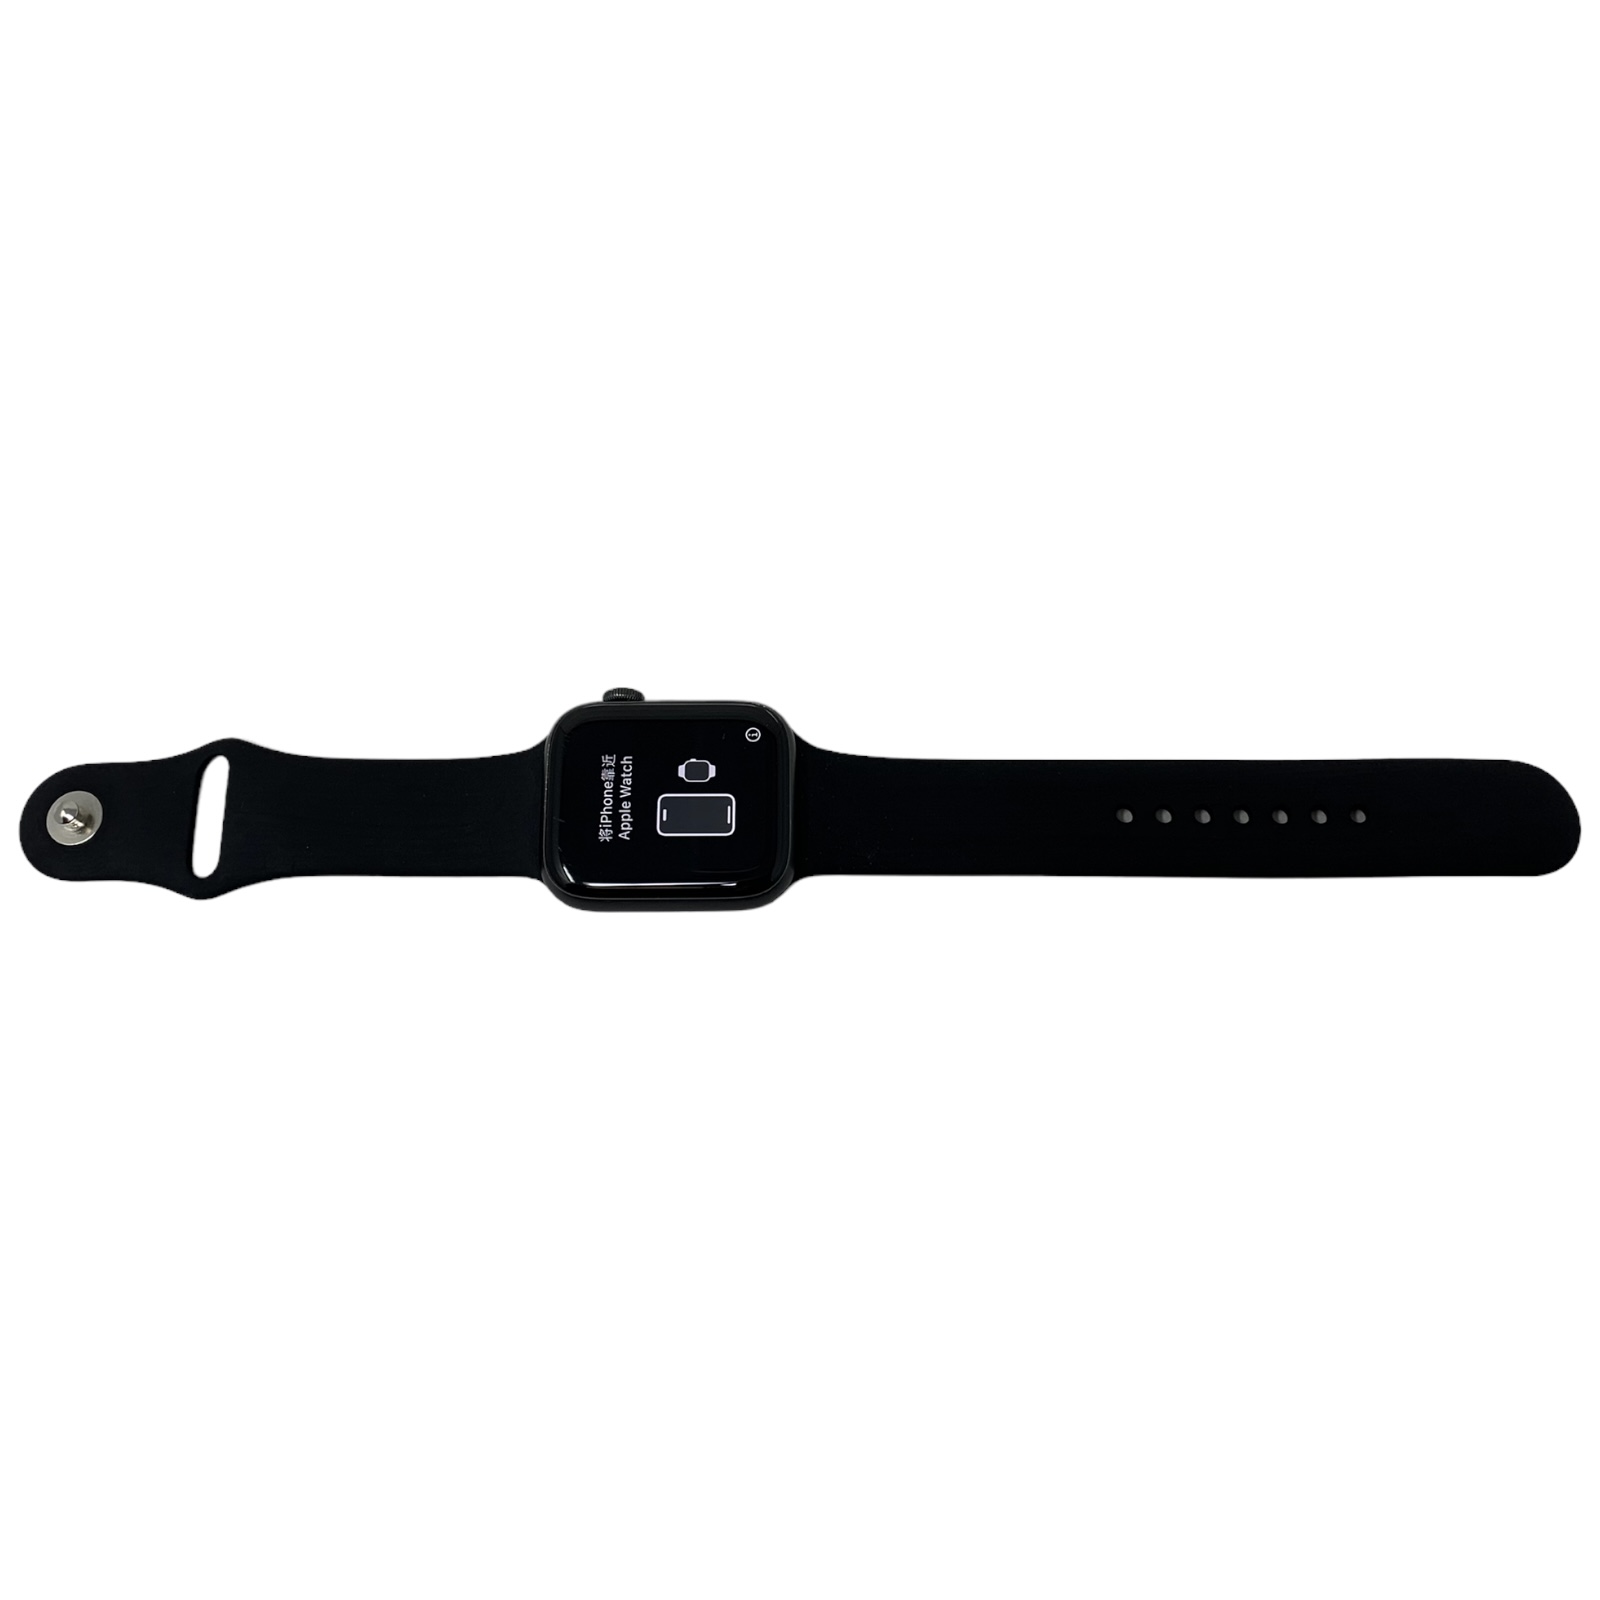 Apple Watch Serie 4 44mm GR. AB Gar. 12M Fattura RSD4592